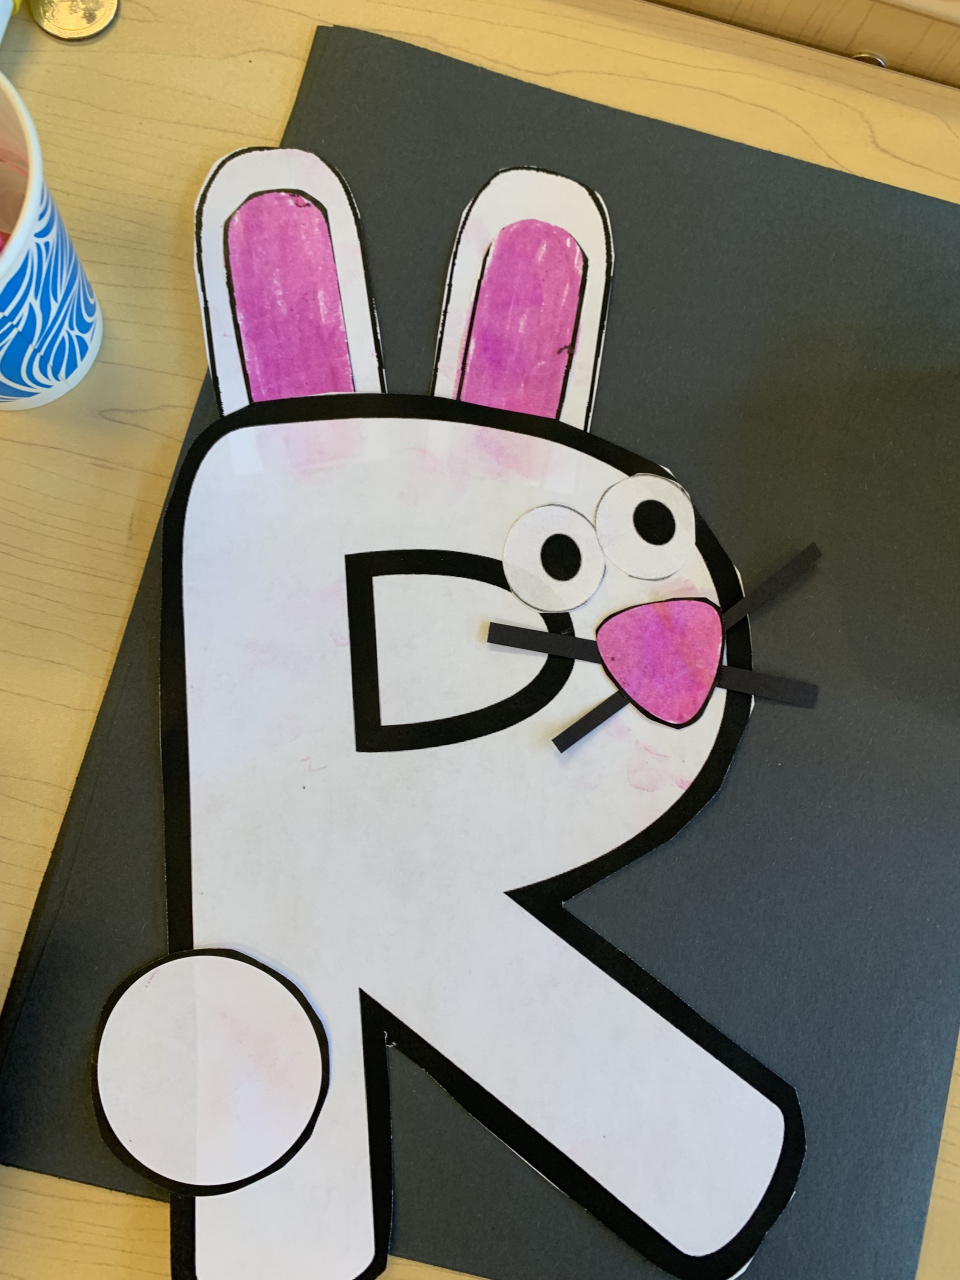 R for Rabbit !!